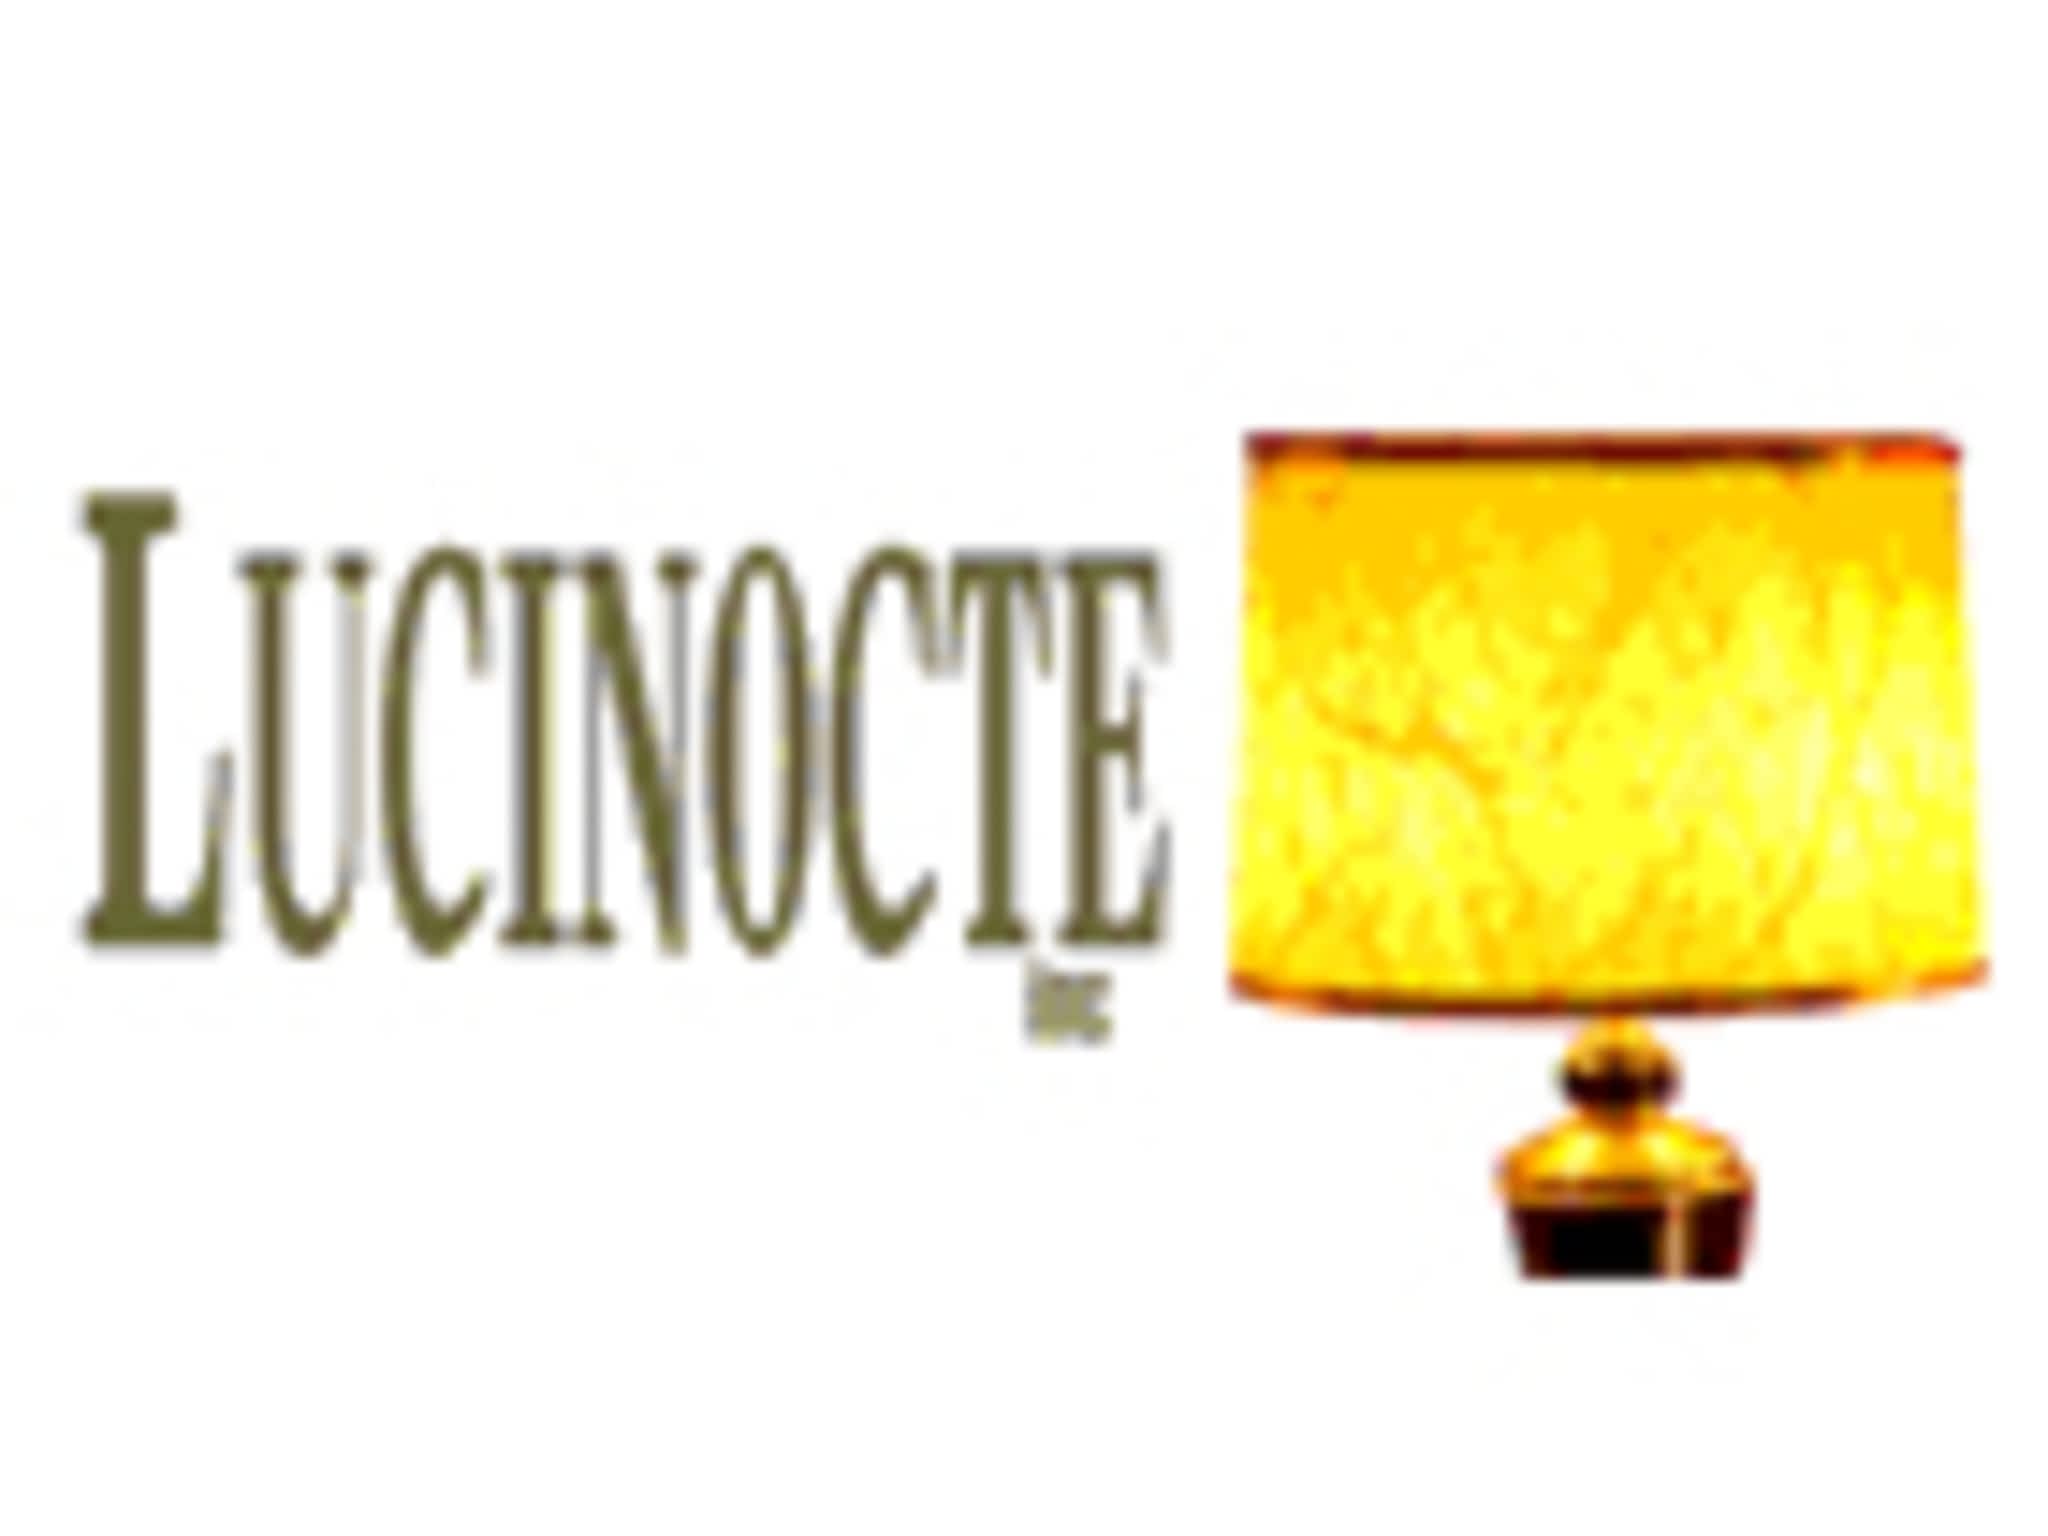 photo Lucinocte Inc